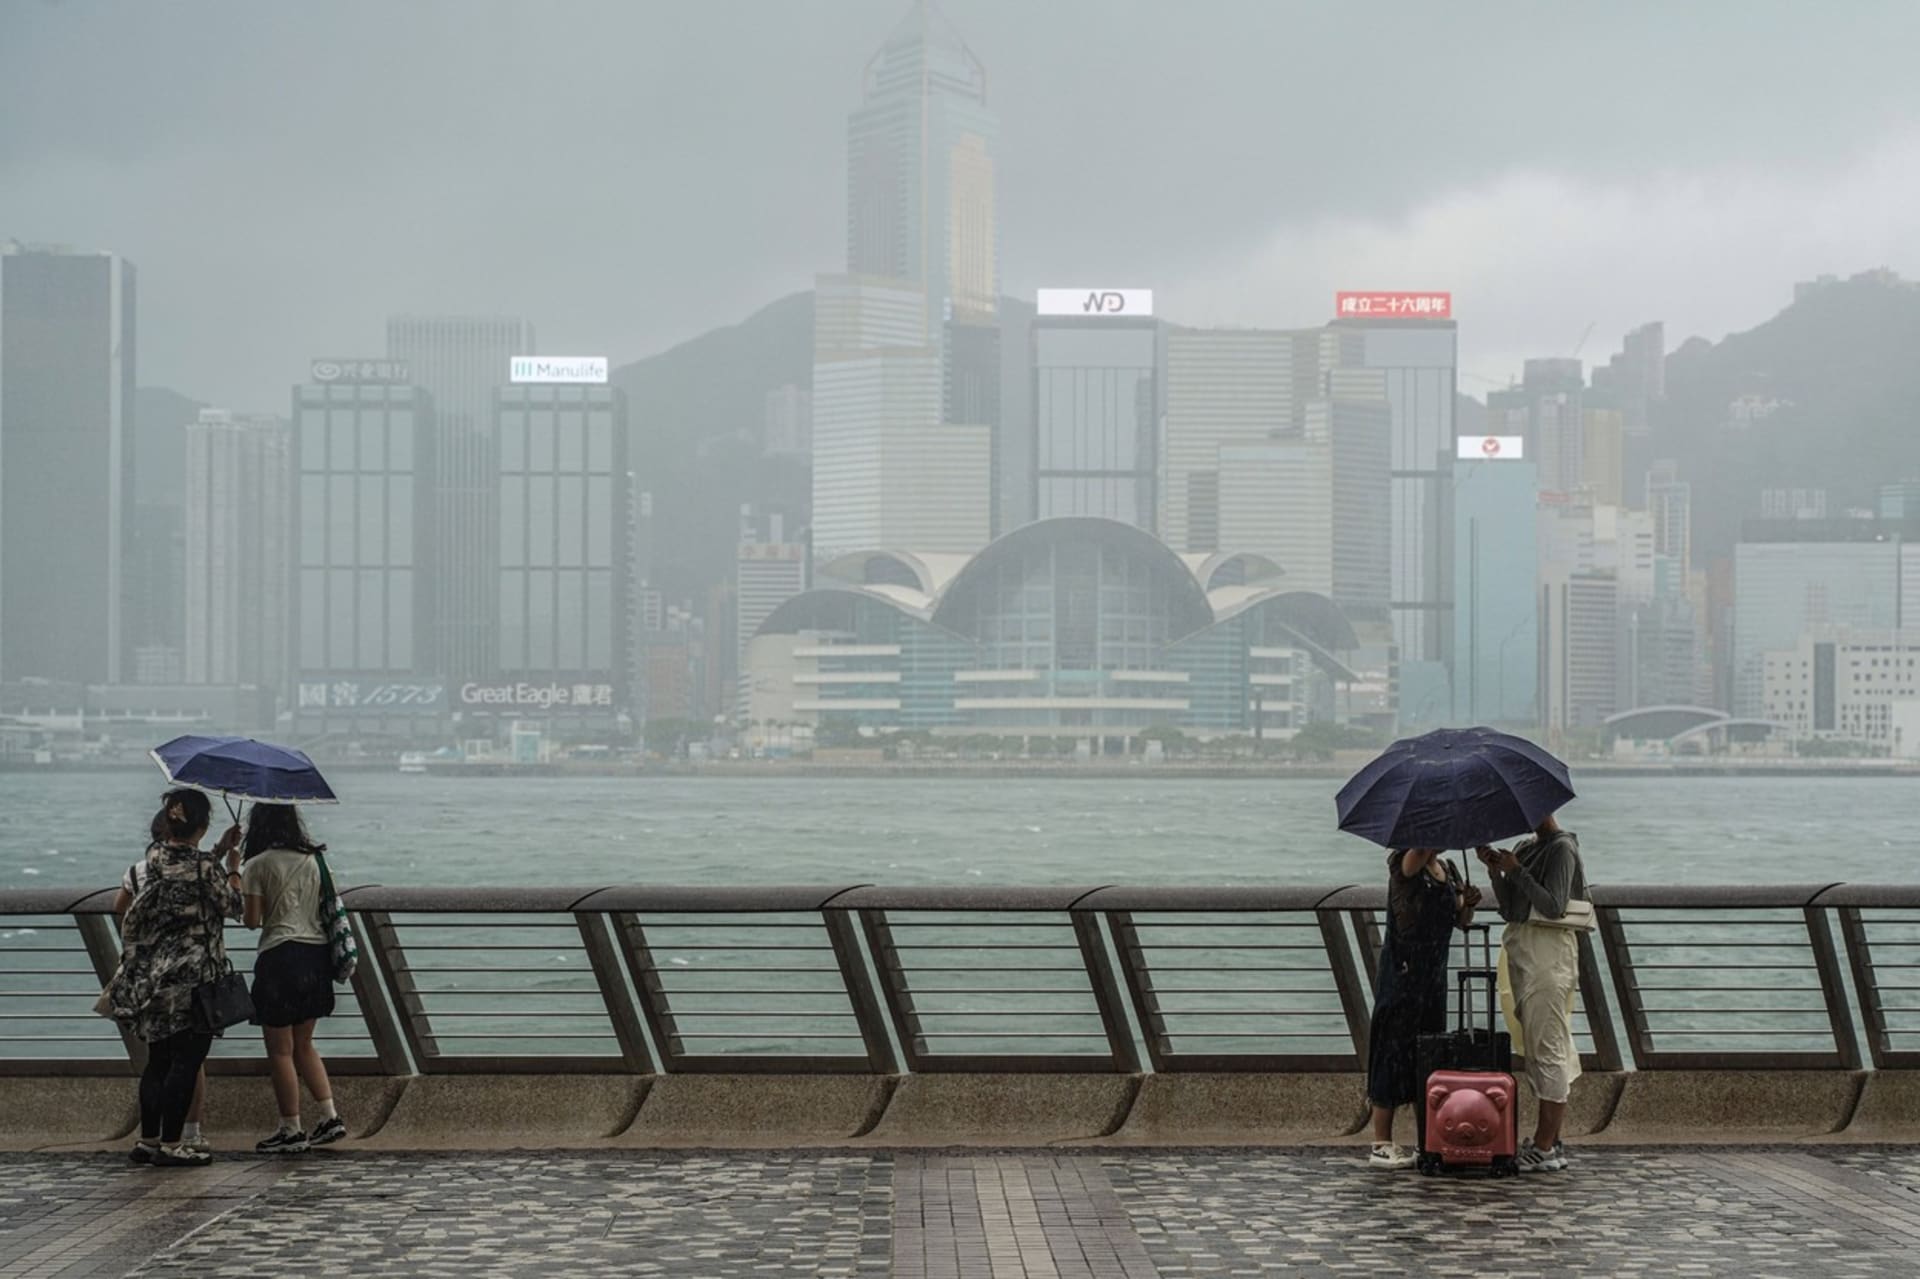 Do Číny dorazil tajfun Talim, úřady evakuovaly 230 tisíc lidí.